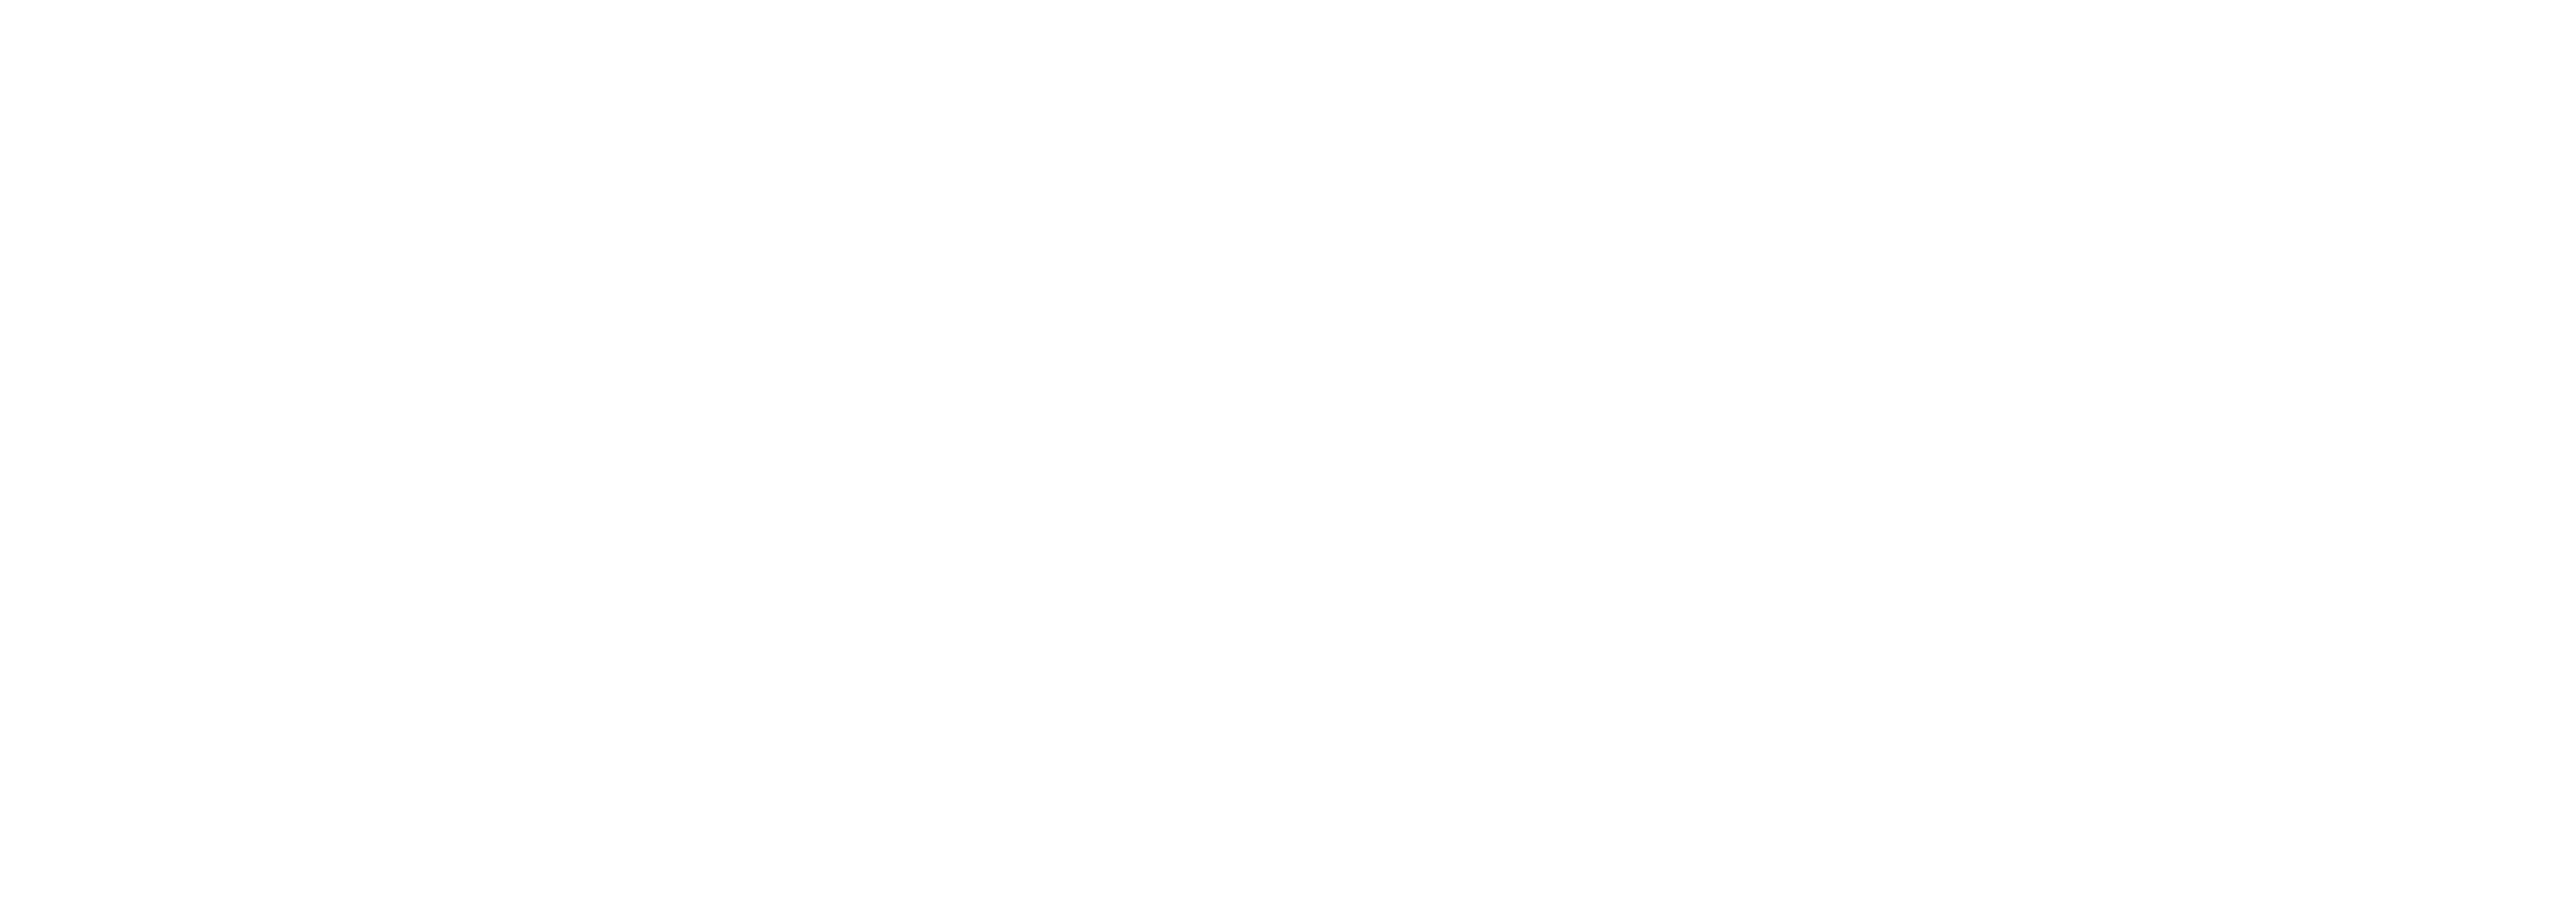 May 2021 - Big Brothers Big Sisters of Halton and Hamilton